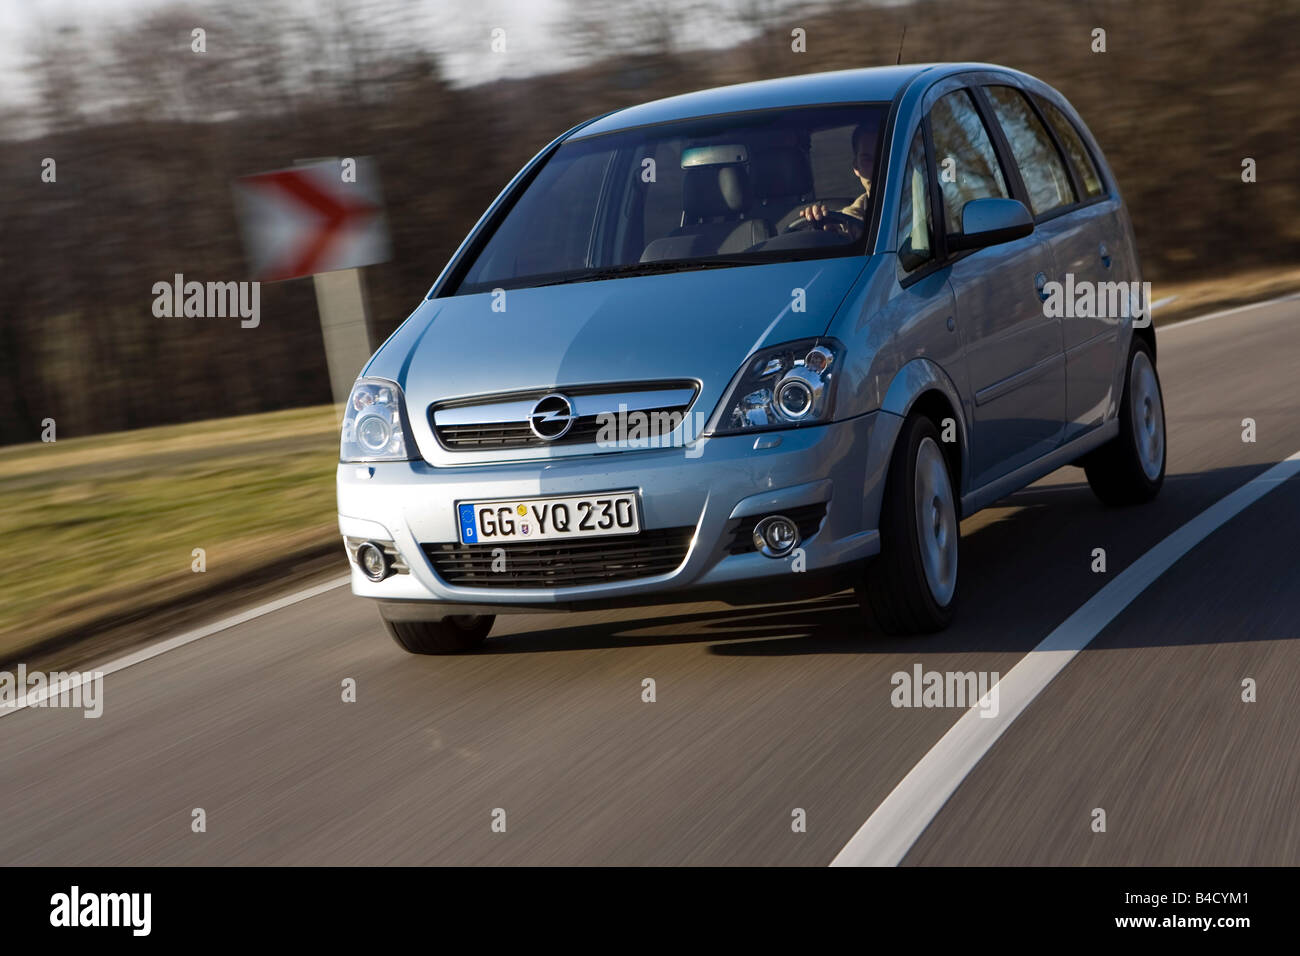 Opel meriva 1 7 cdti fotografías e imágenes de alta resolución - Alamy